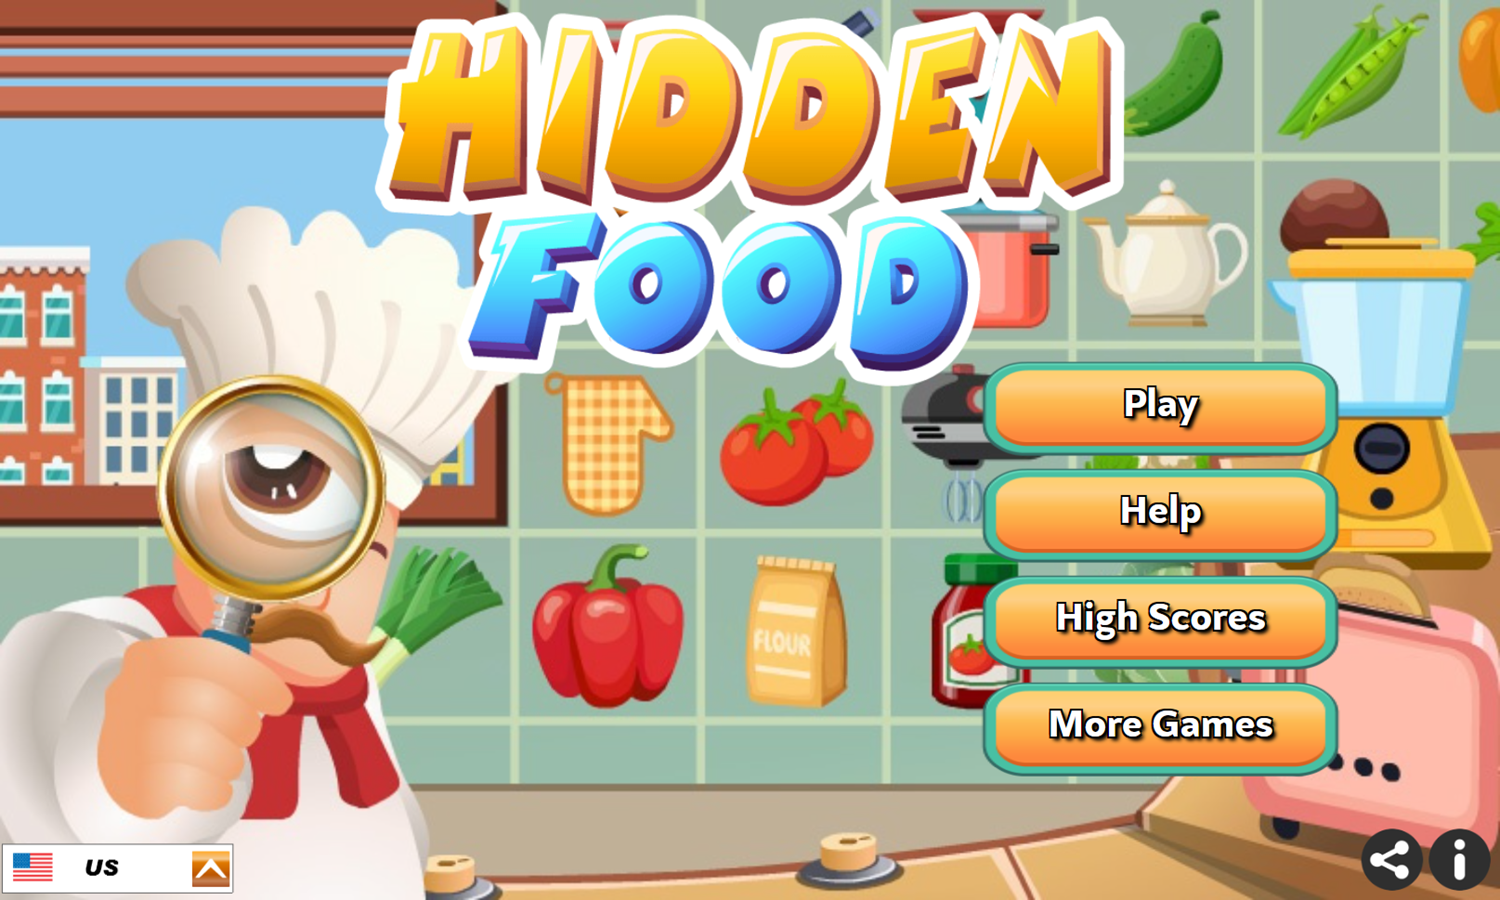 Hidden Food Game Welcome Screen Screenshot.